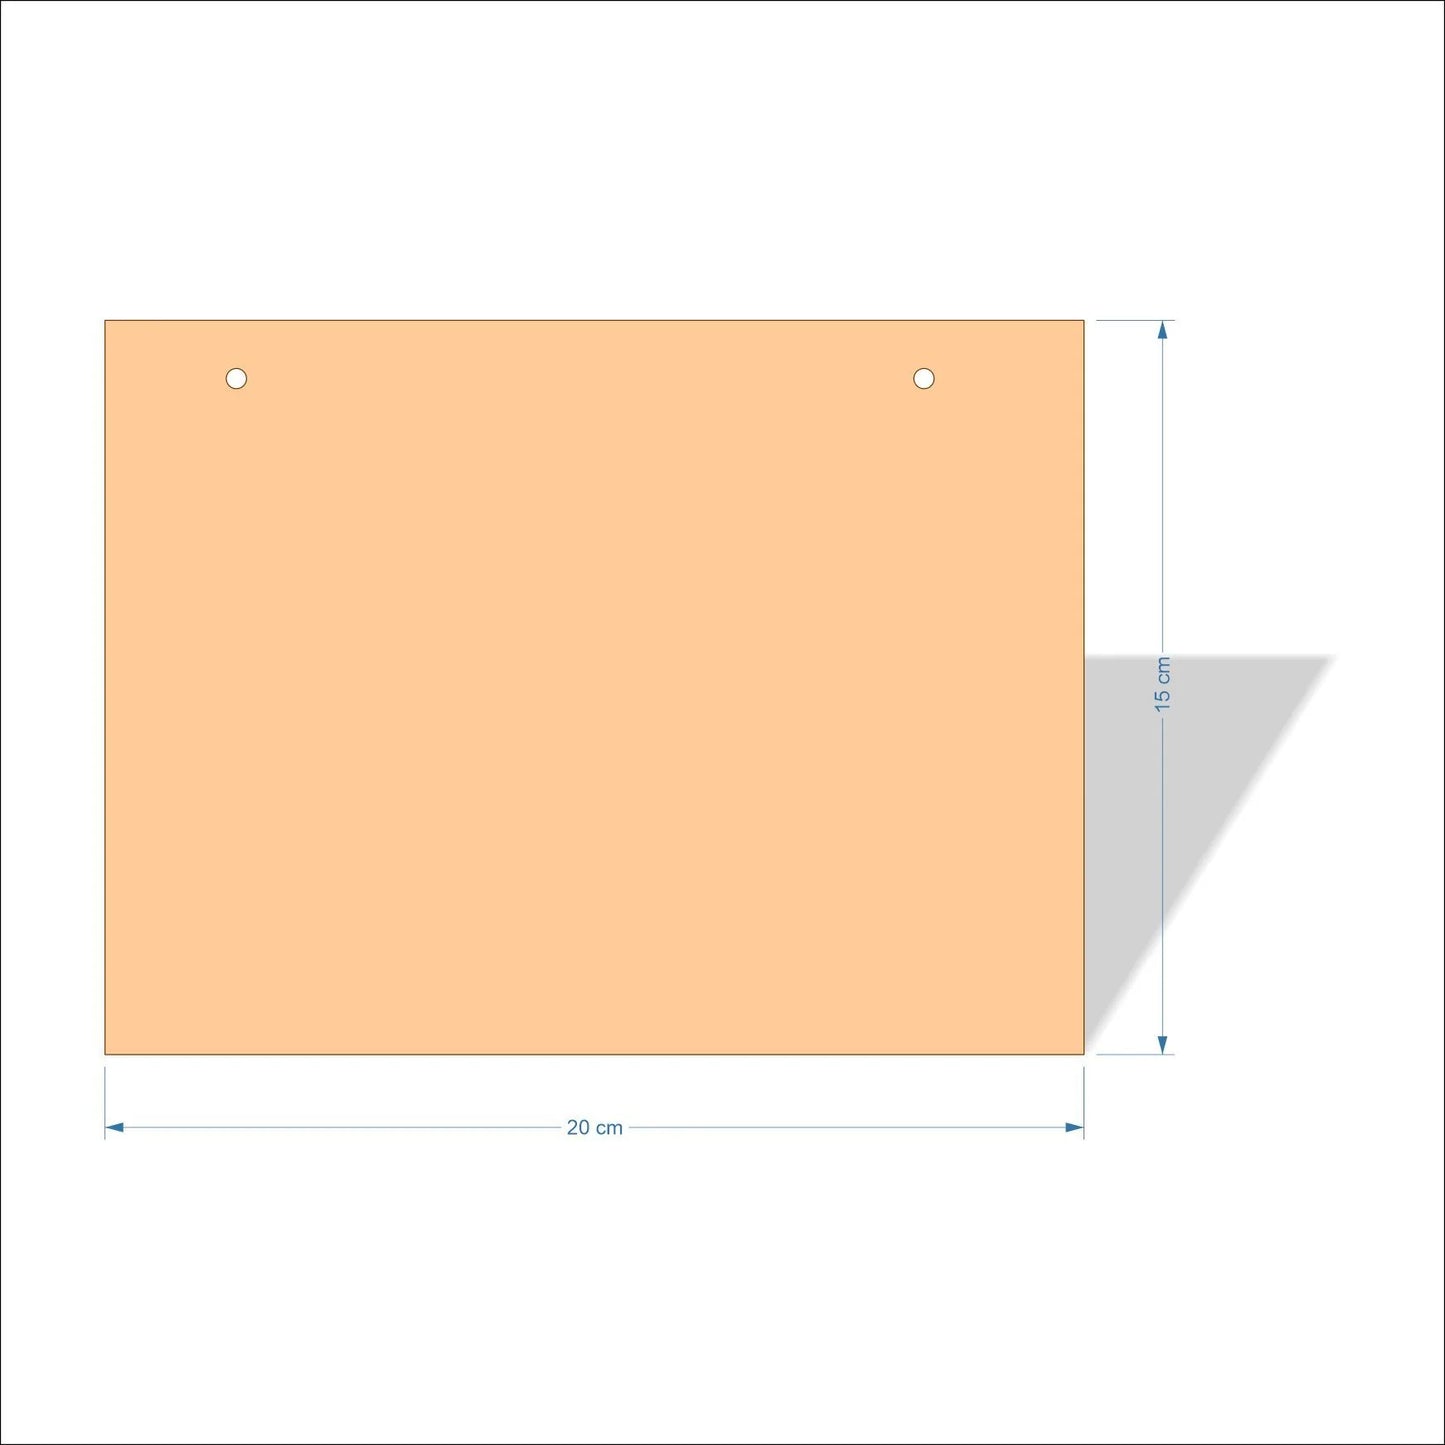 20 cm X 15 cm 4mm poplar plywood Plaques with square corners